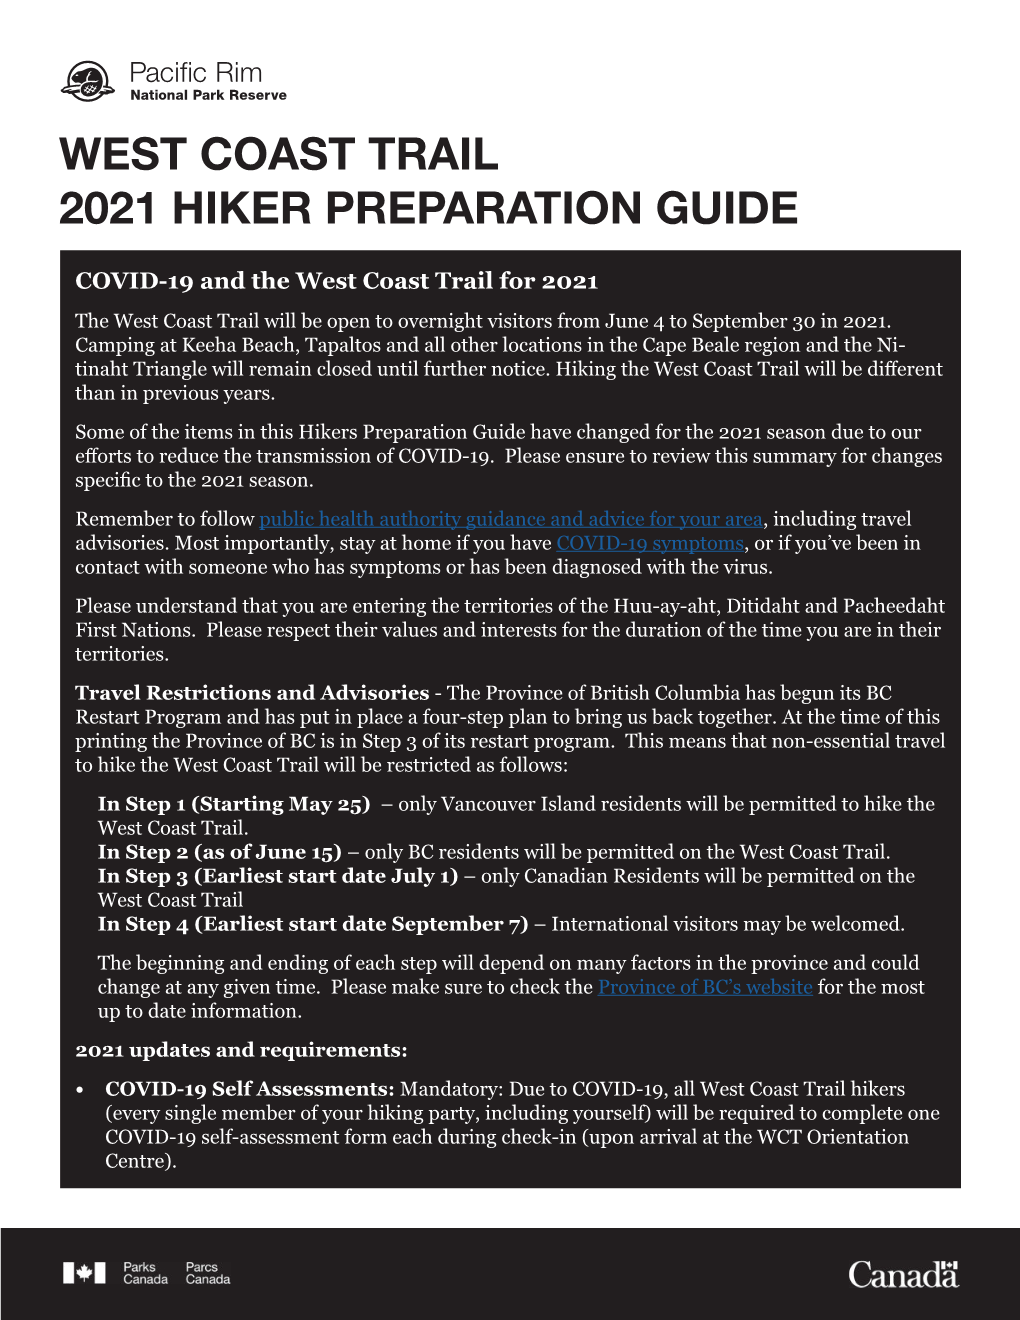 West Coast Trail 2021 Hiker Preparation Guide